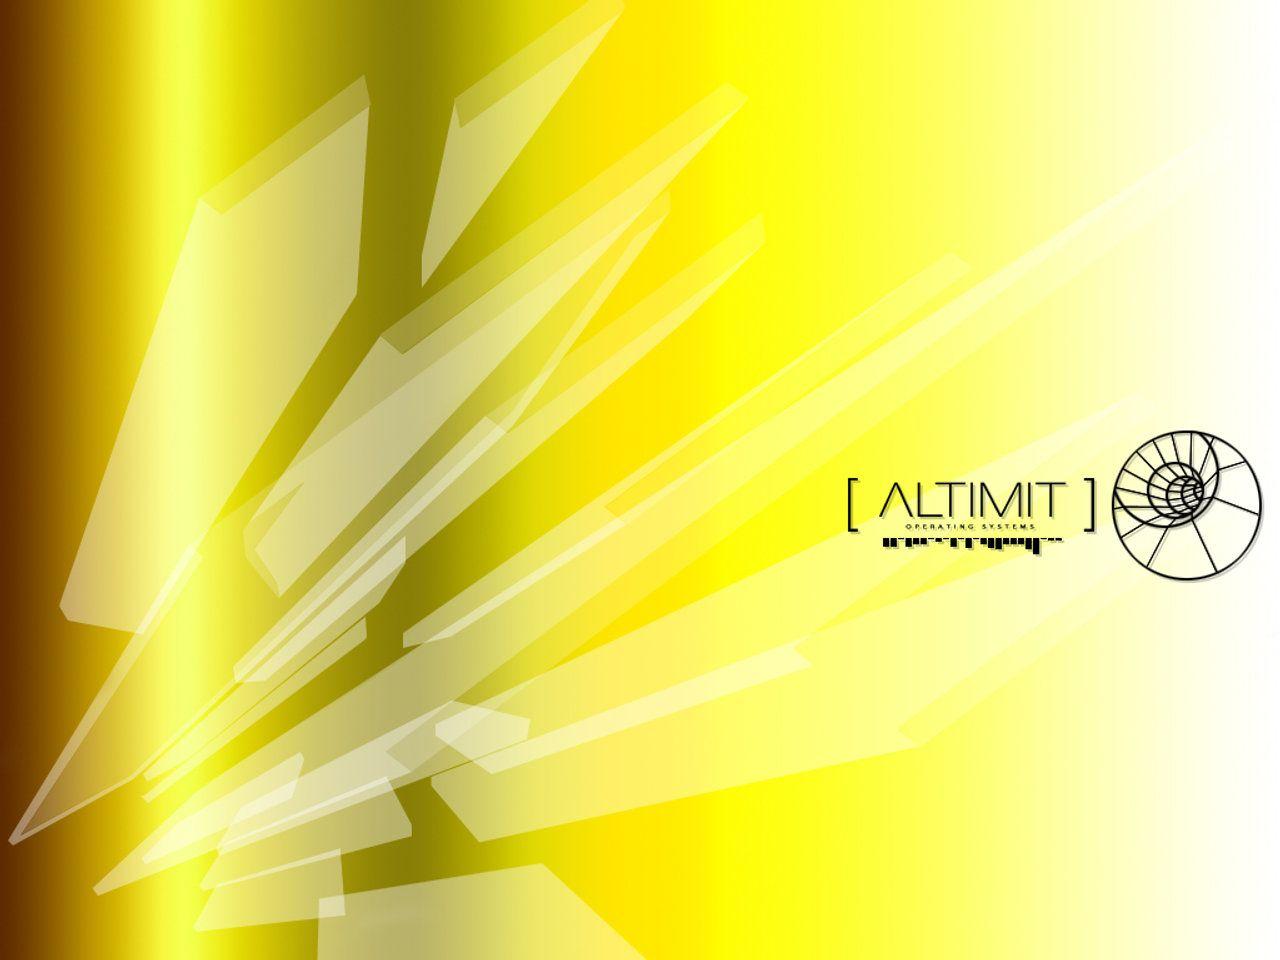 Download Dot Hack Altimit Yellow Video Games Gallery Wallpaper